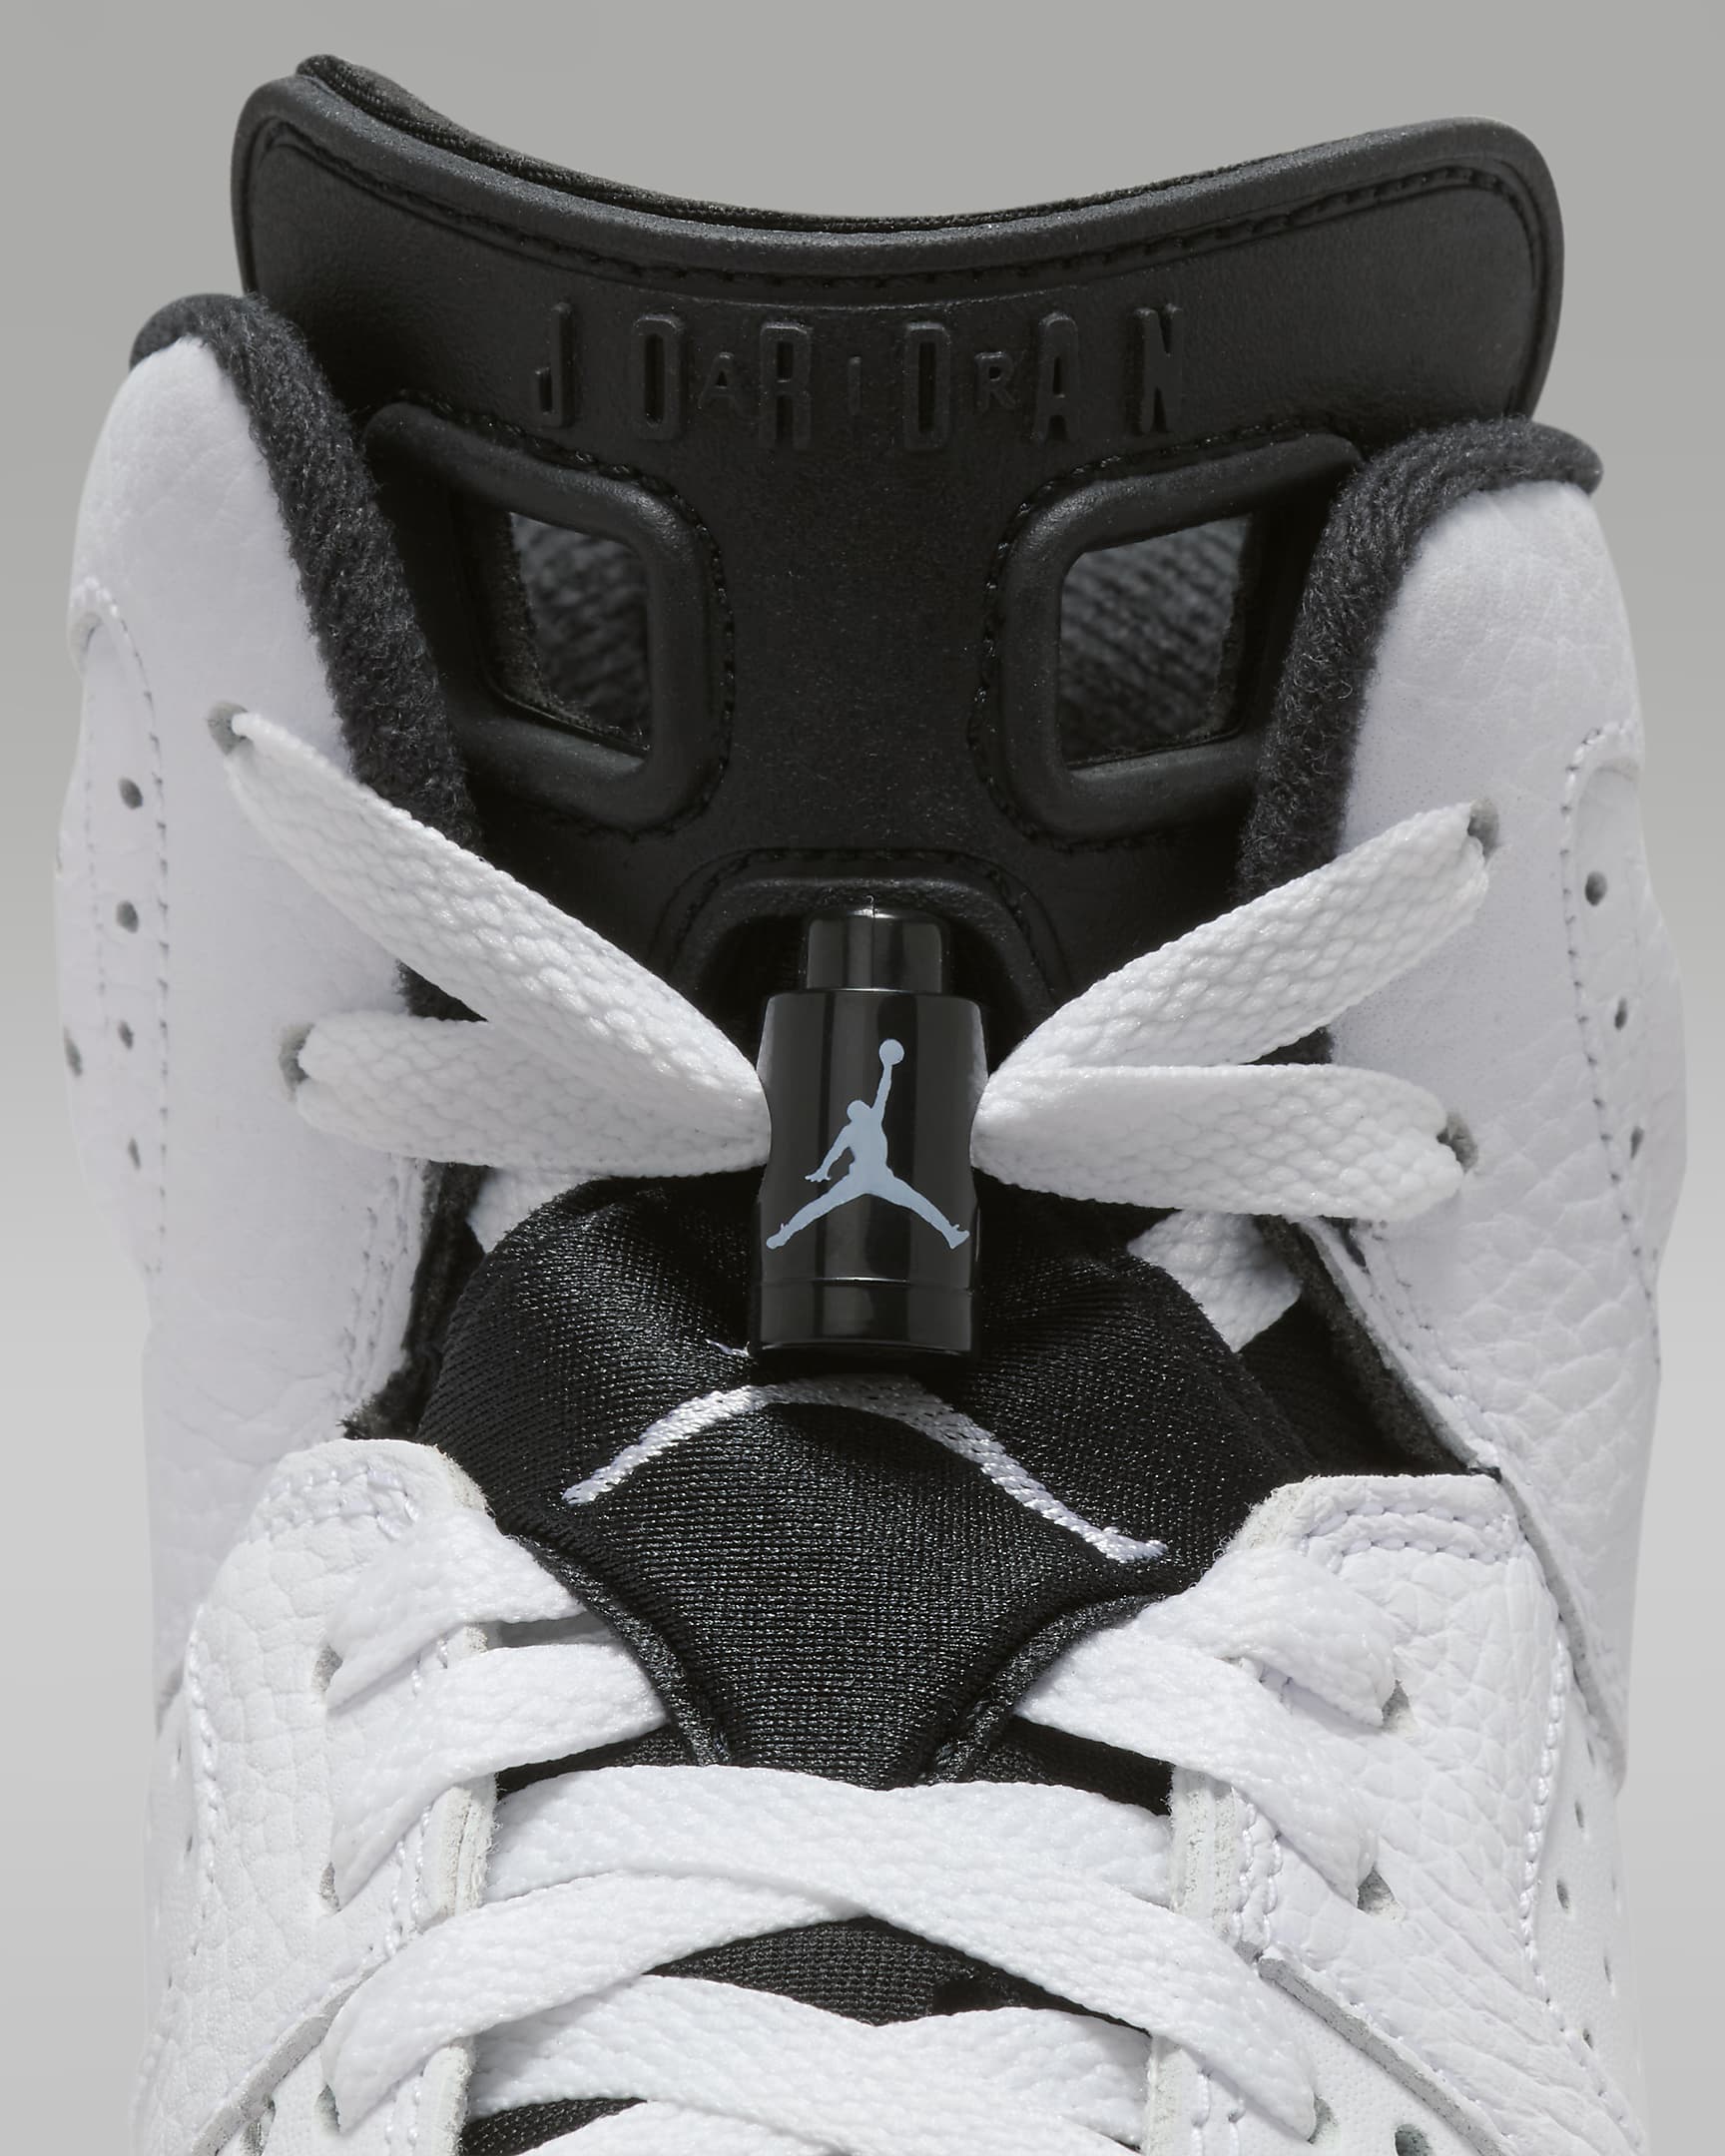 Air Jordan 6 Retro "White/Black"